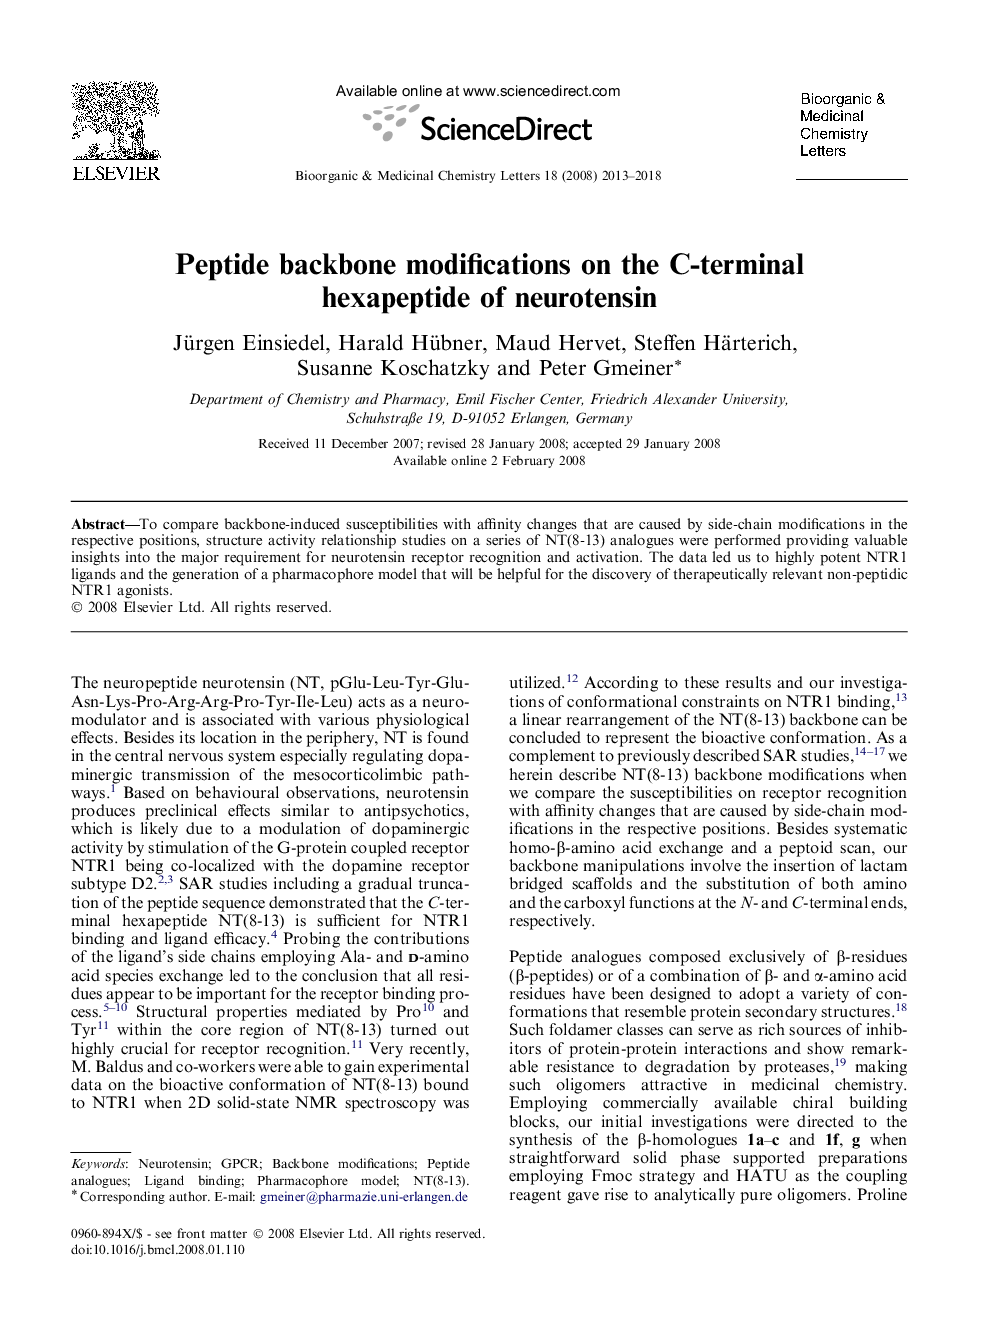 Peptide backbone modifications on the C-terminal hexapeptide of neurotensin